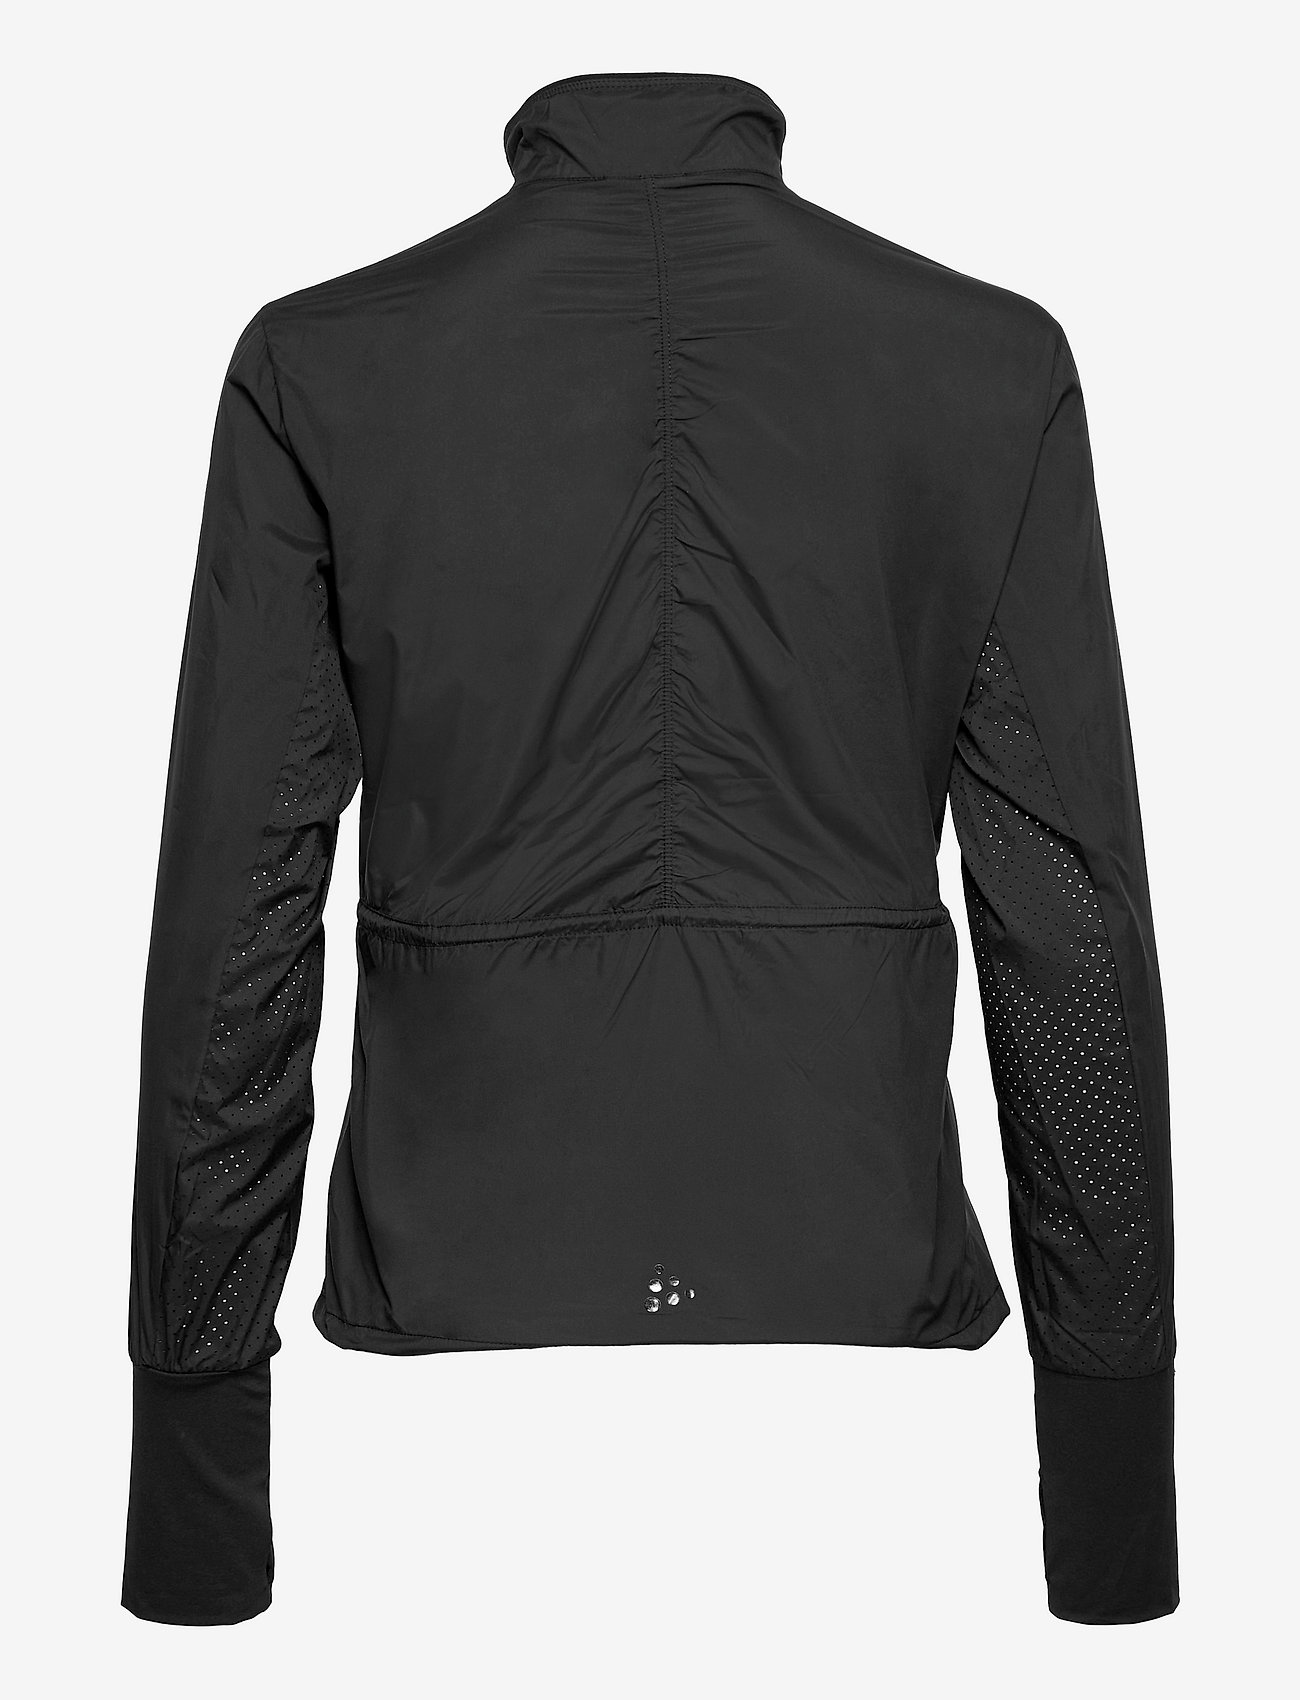 Craft - Adv Essence Wind Jacket W - sports jackets - black - 1